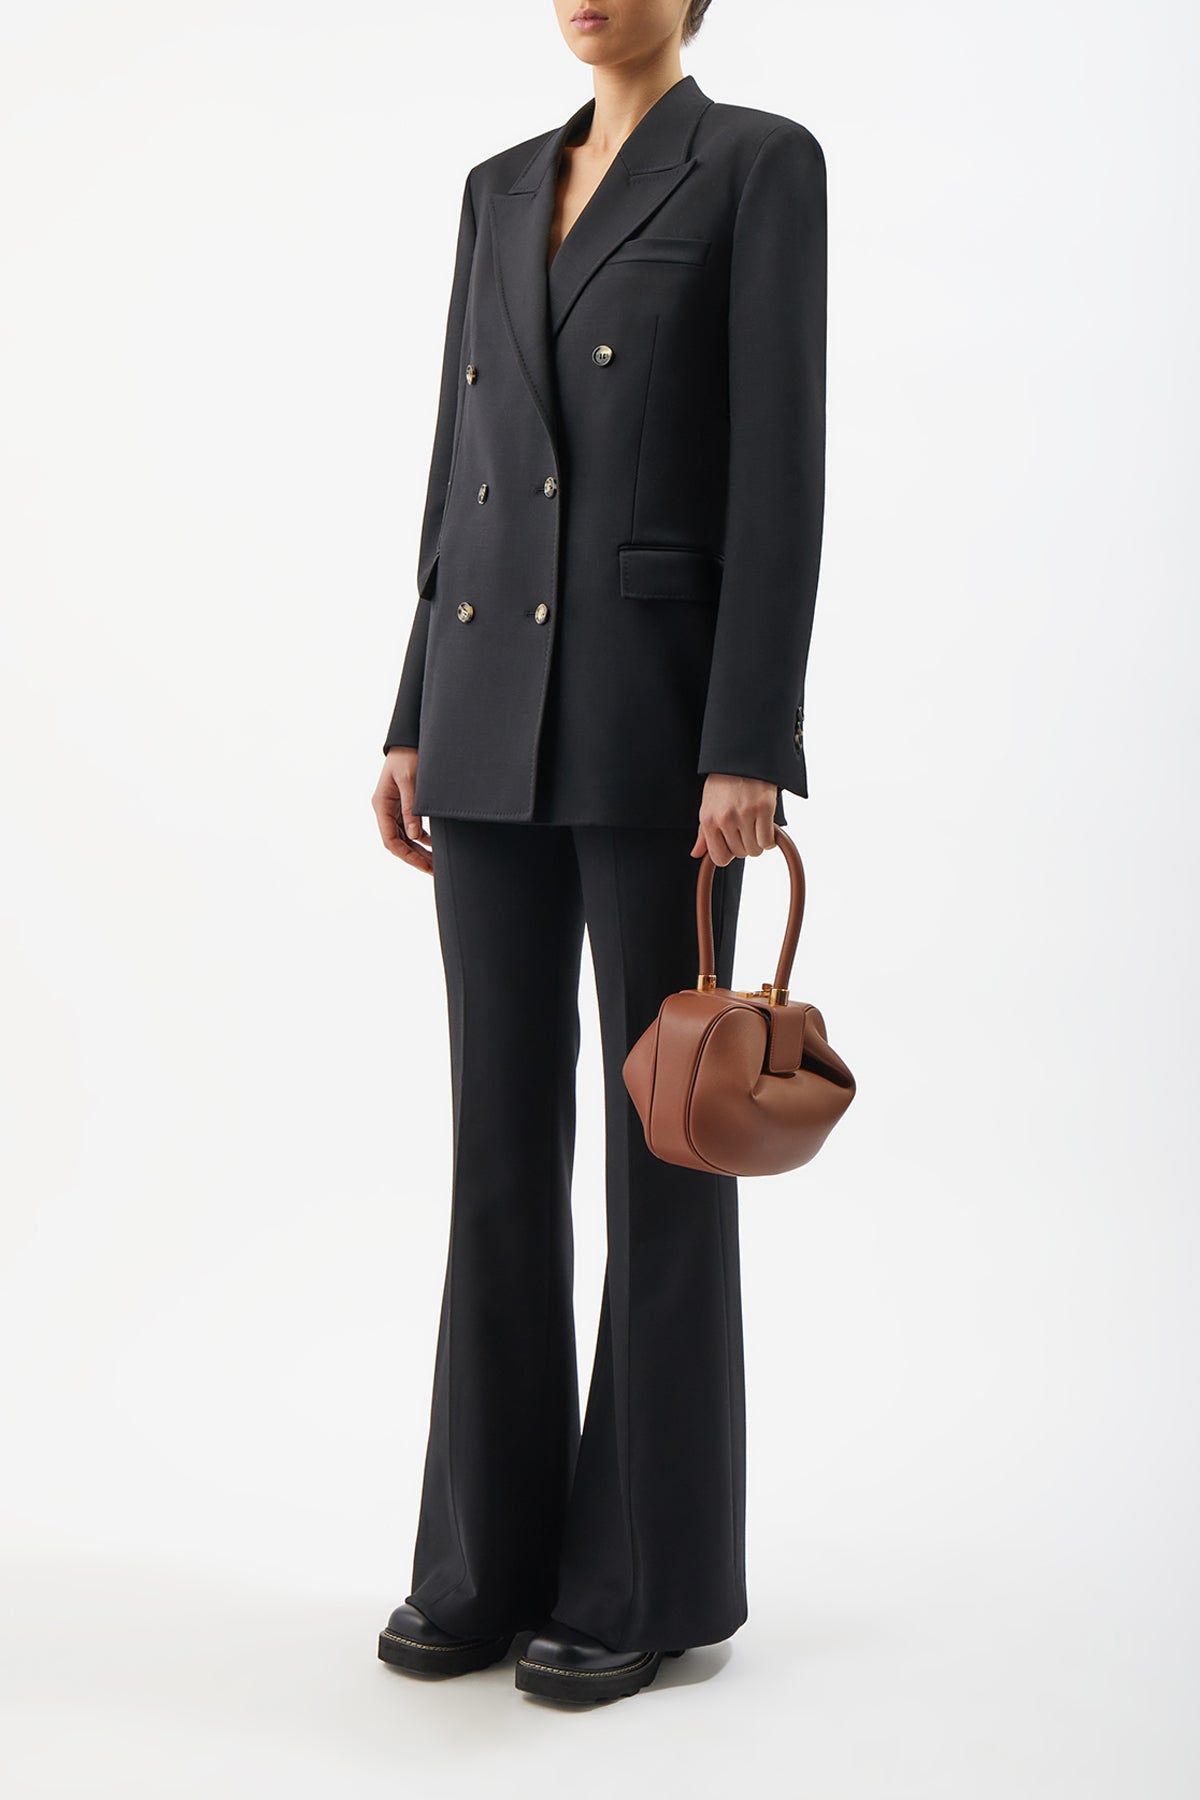 Gabriela Hearst Nina Leather Top-Handle Bag, Bordeaux, Women's